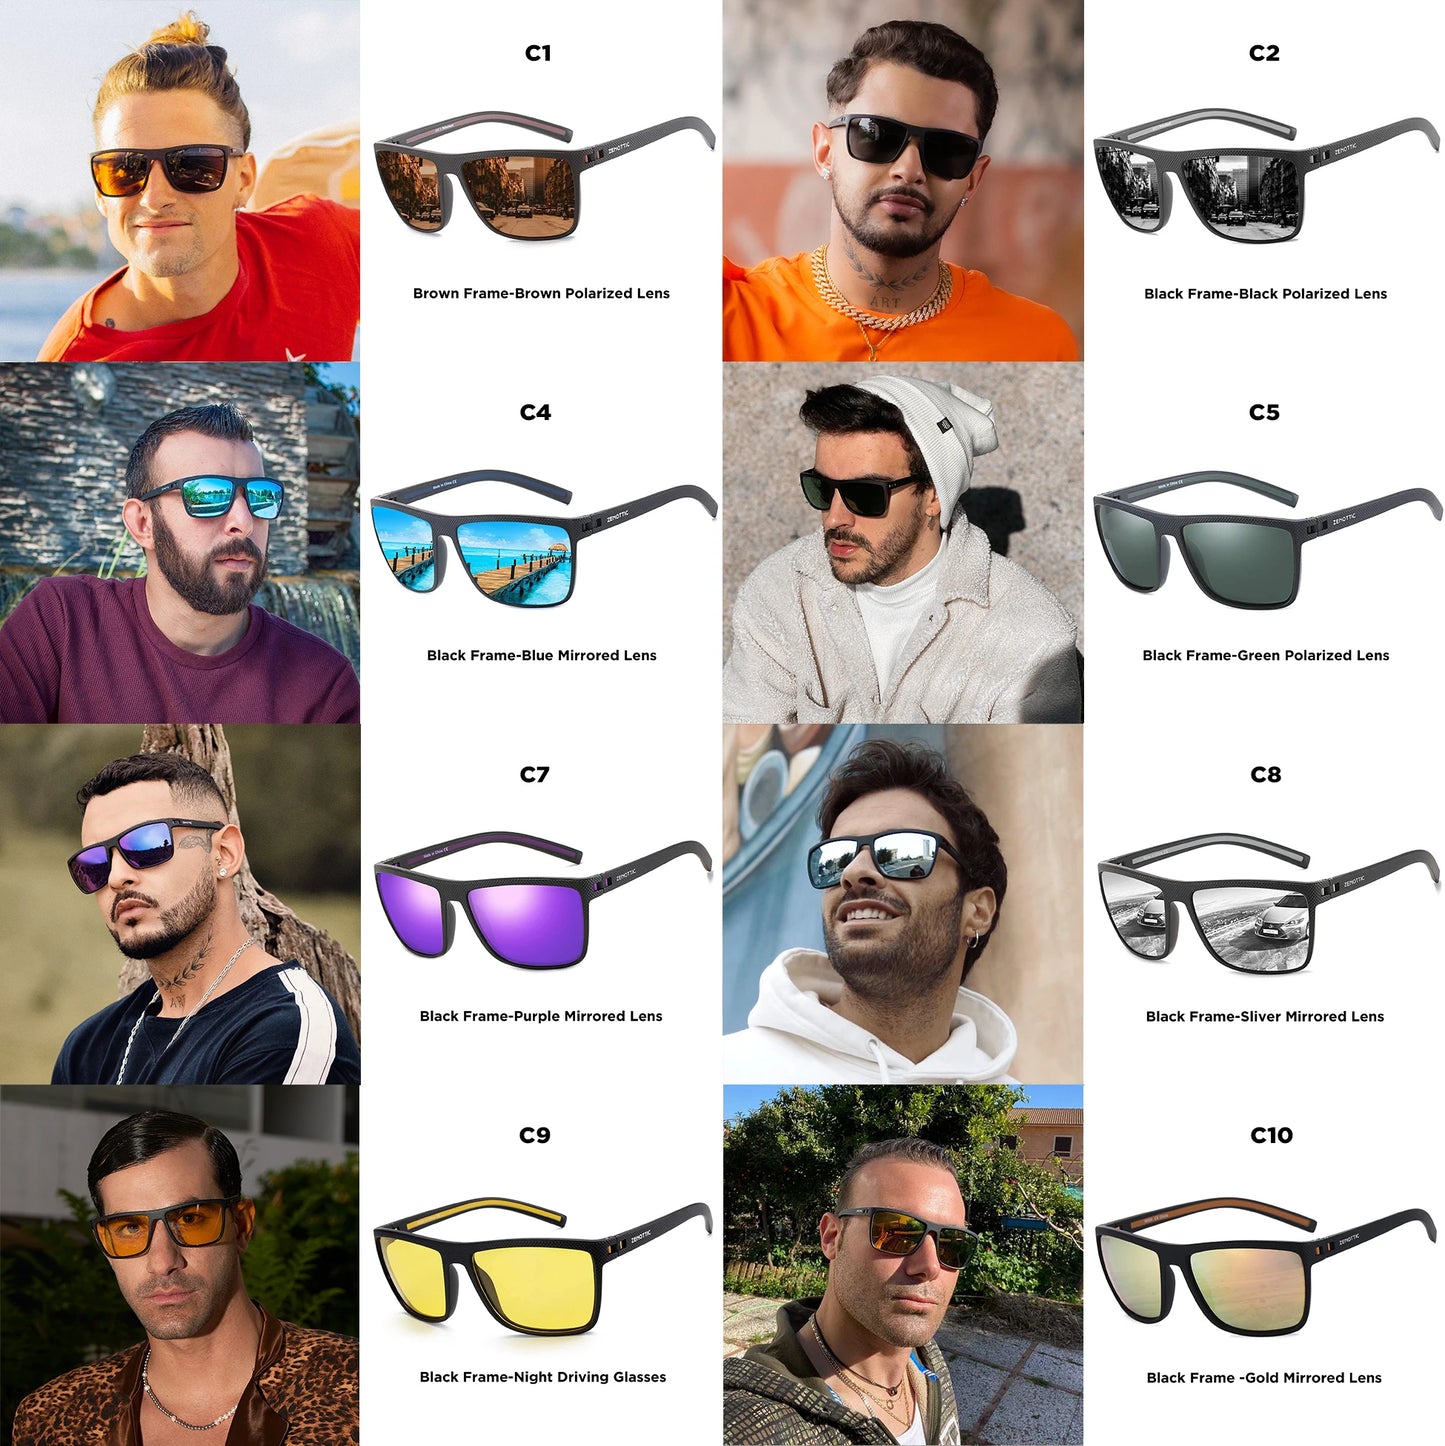 ZENOTTIC Fashion Polarized Sunglasses Shade for Women Men Lightweight TR90 Frame UV400 Protection Square Sun Glasses 2022 2023